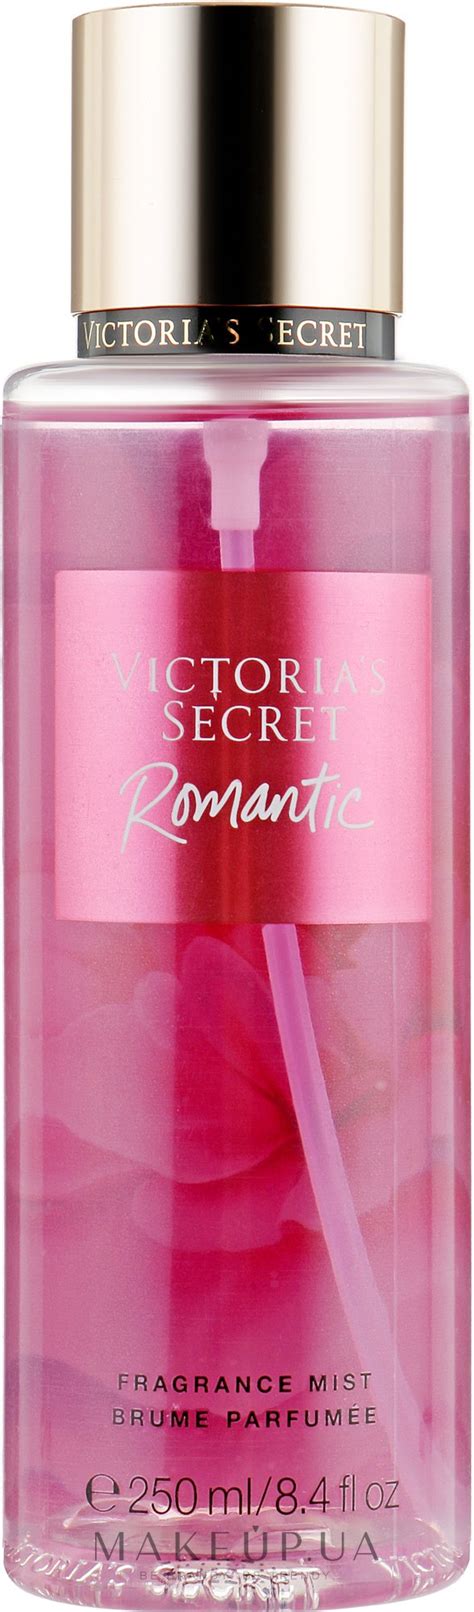 Victoria S Secret Romantic Fragrance Body